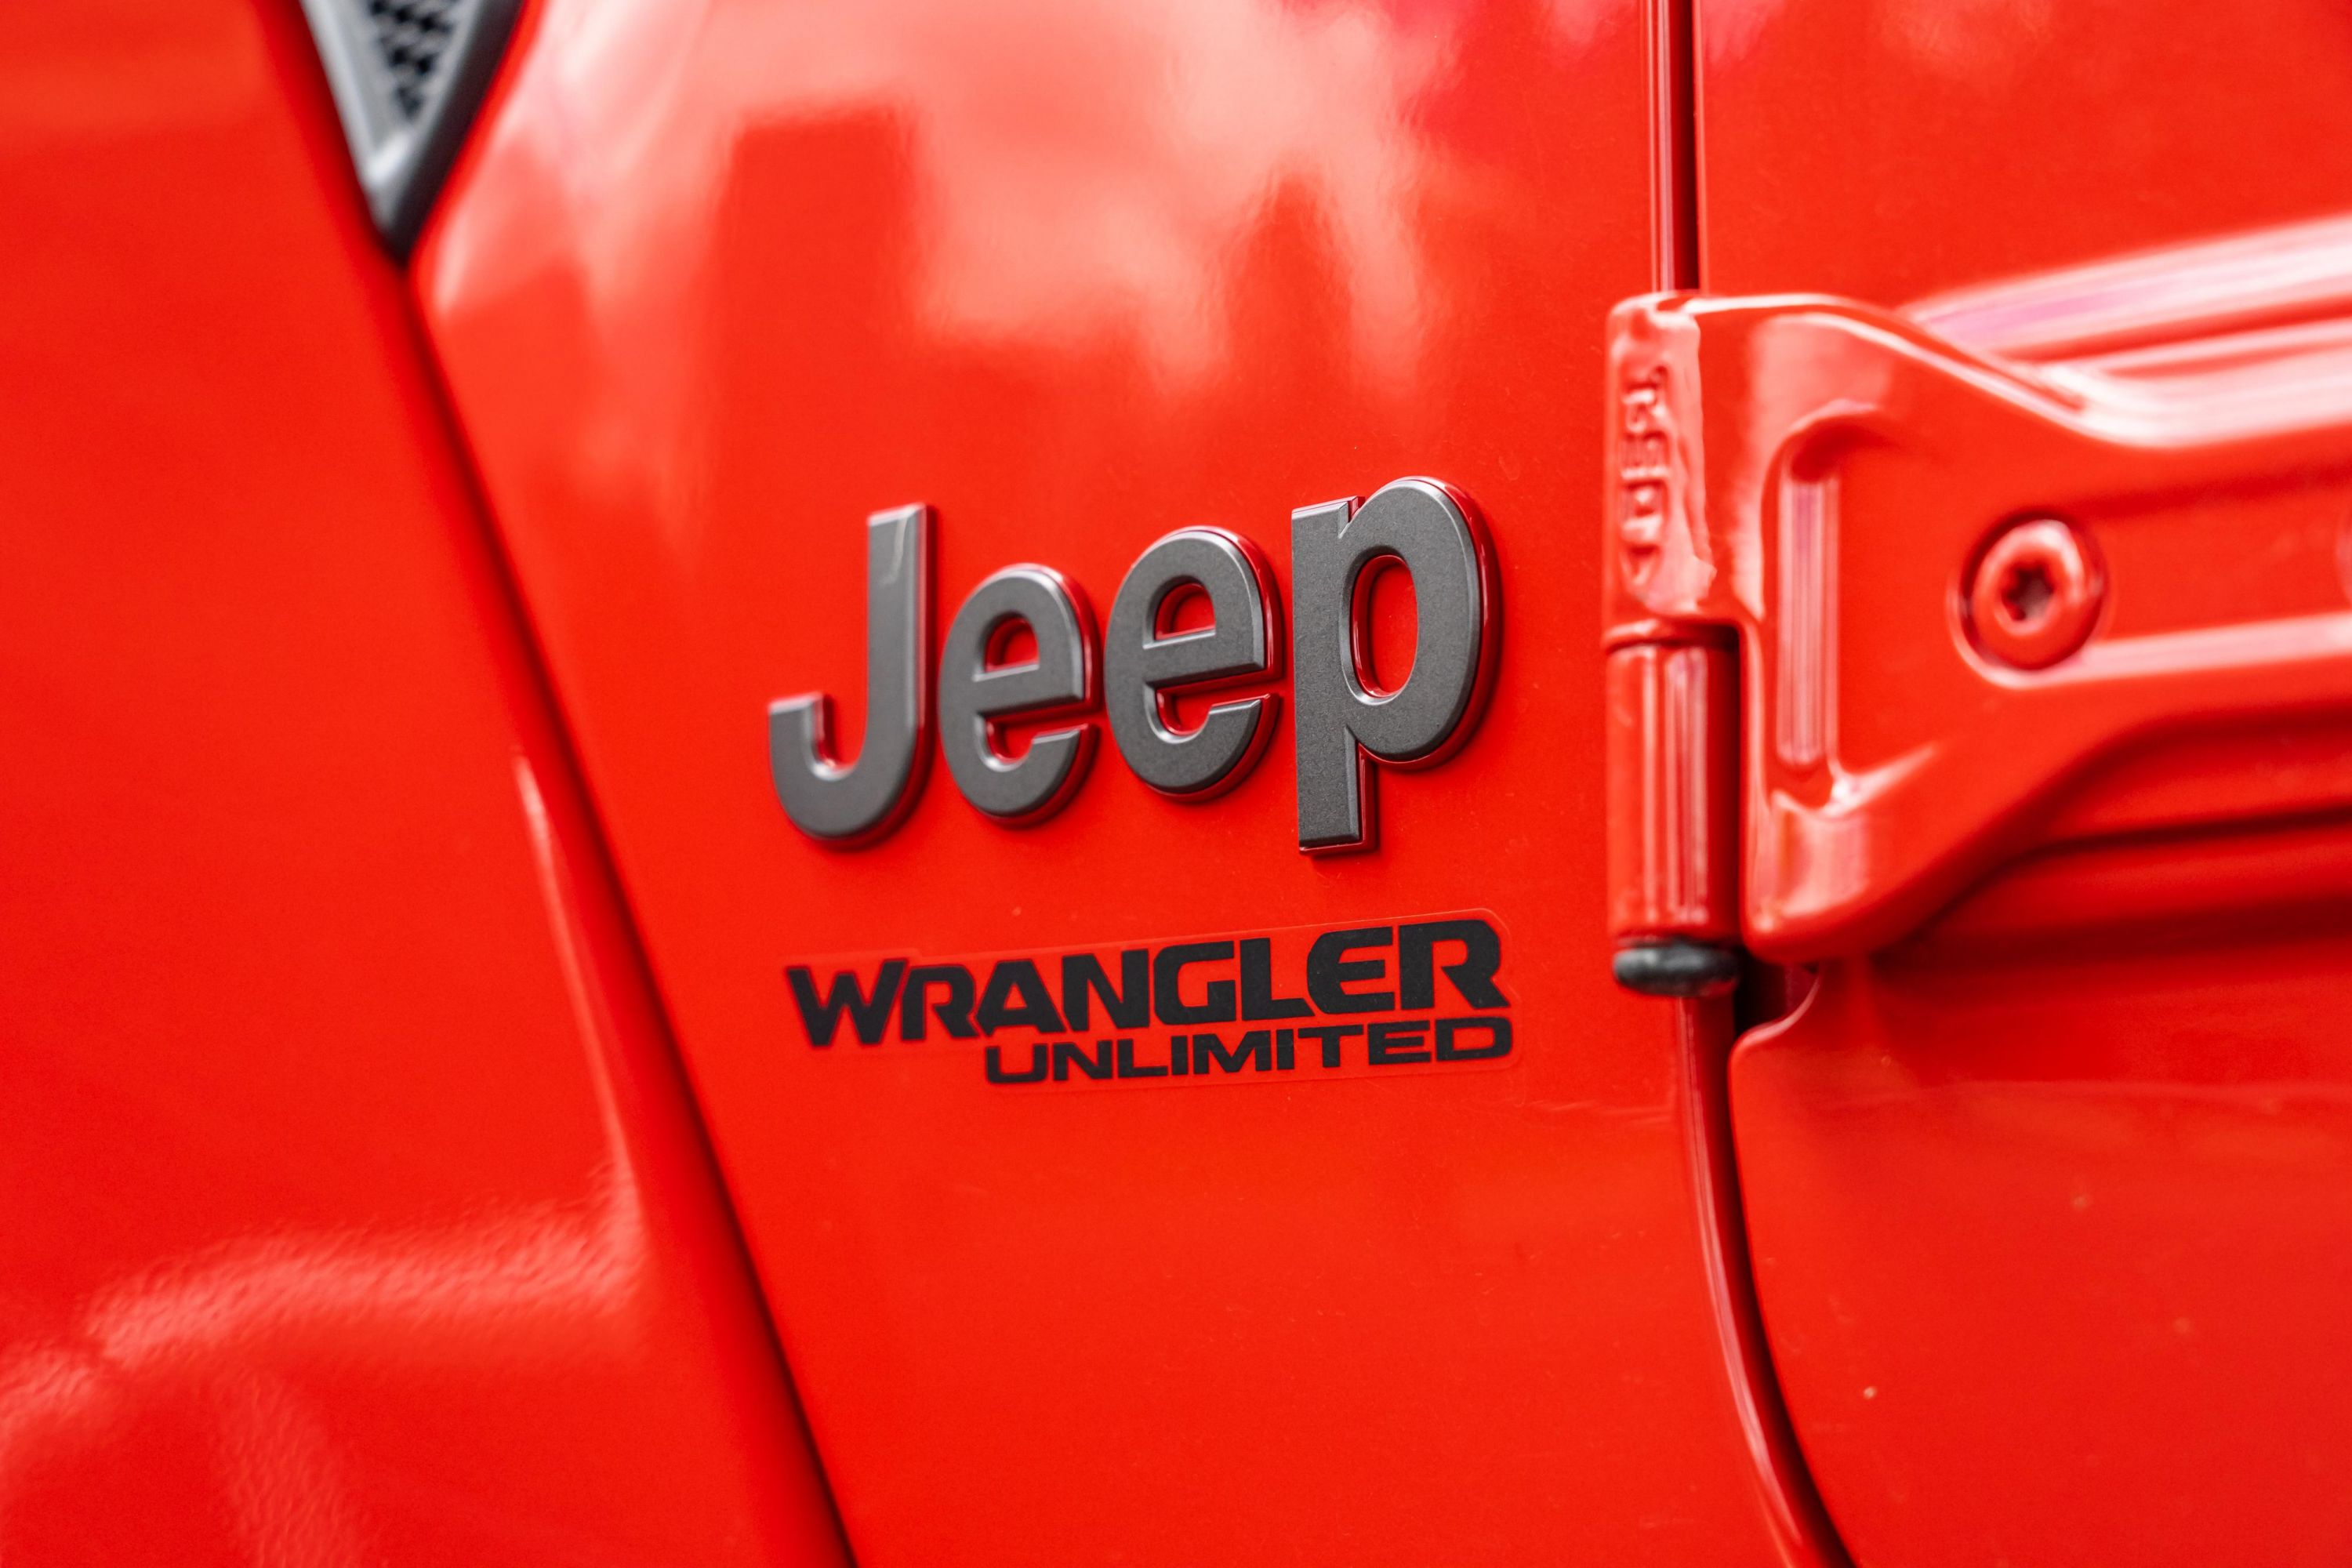 jeep wrangler logo